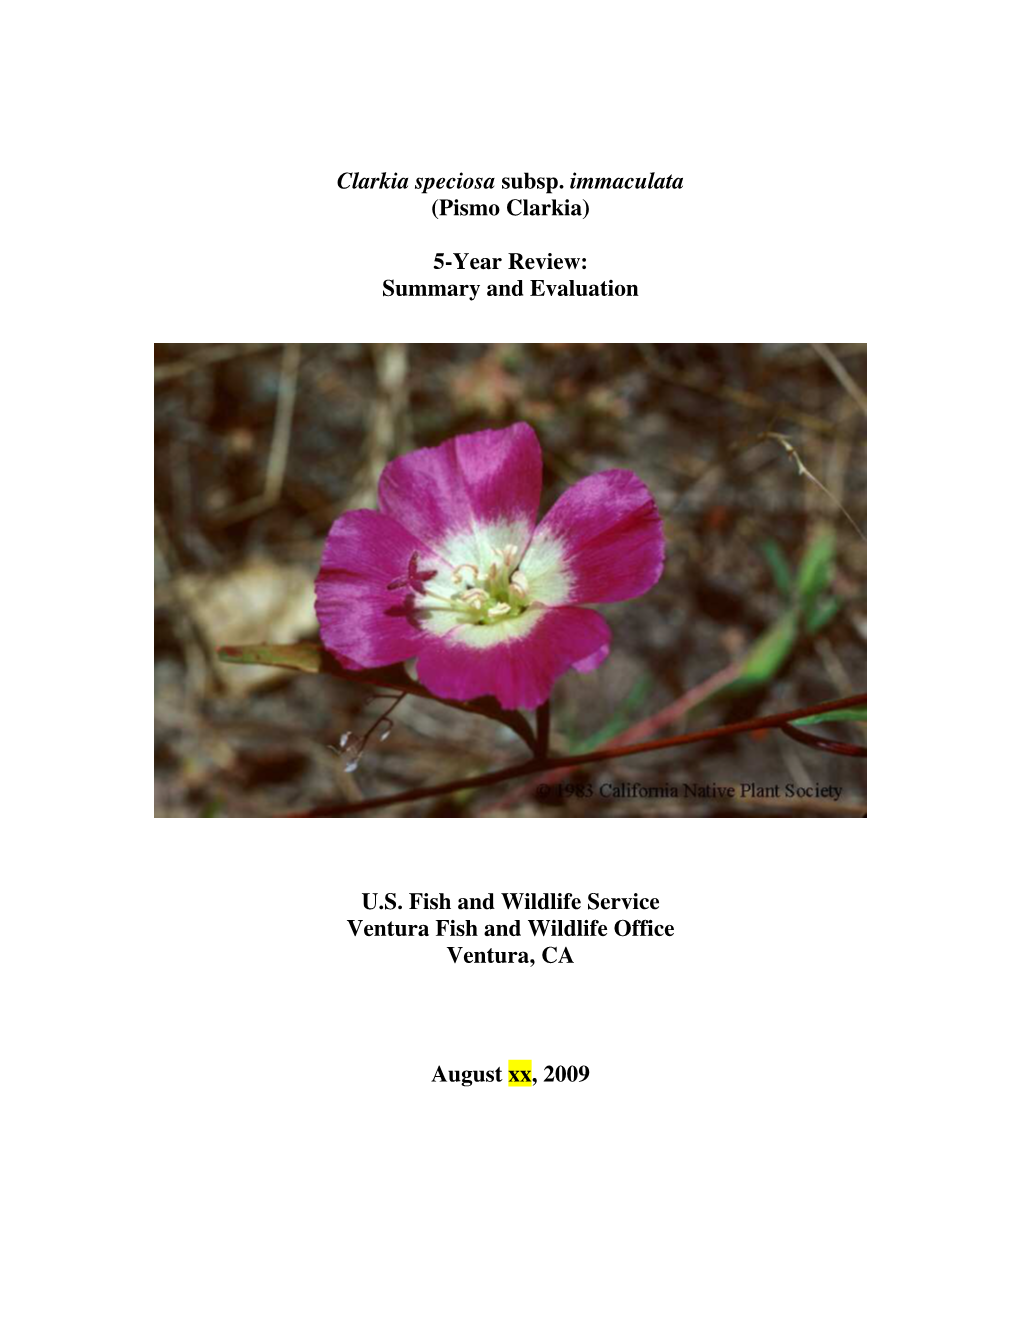 Clarkia Speciosa Subsp. Immaculata (Pismo Clarkia) 5-Year Review